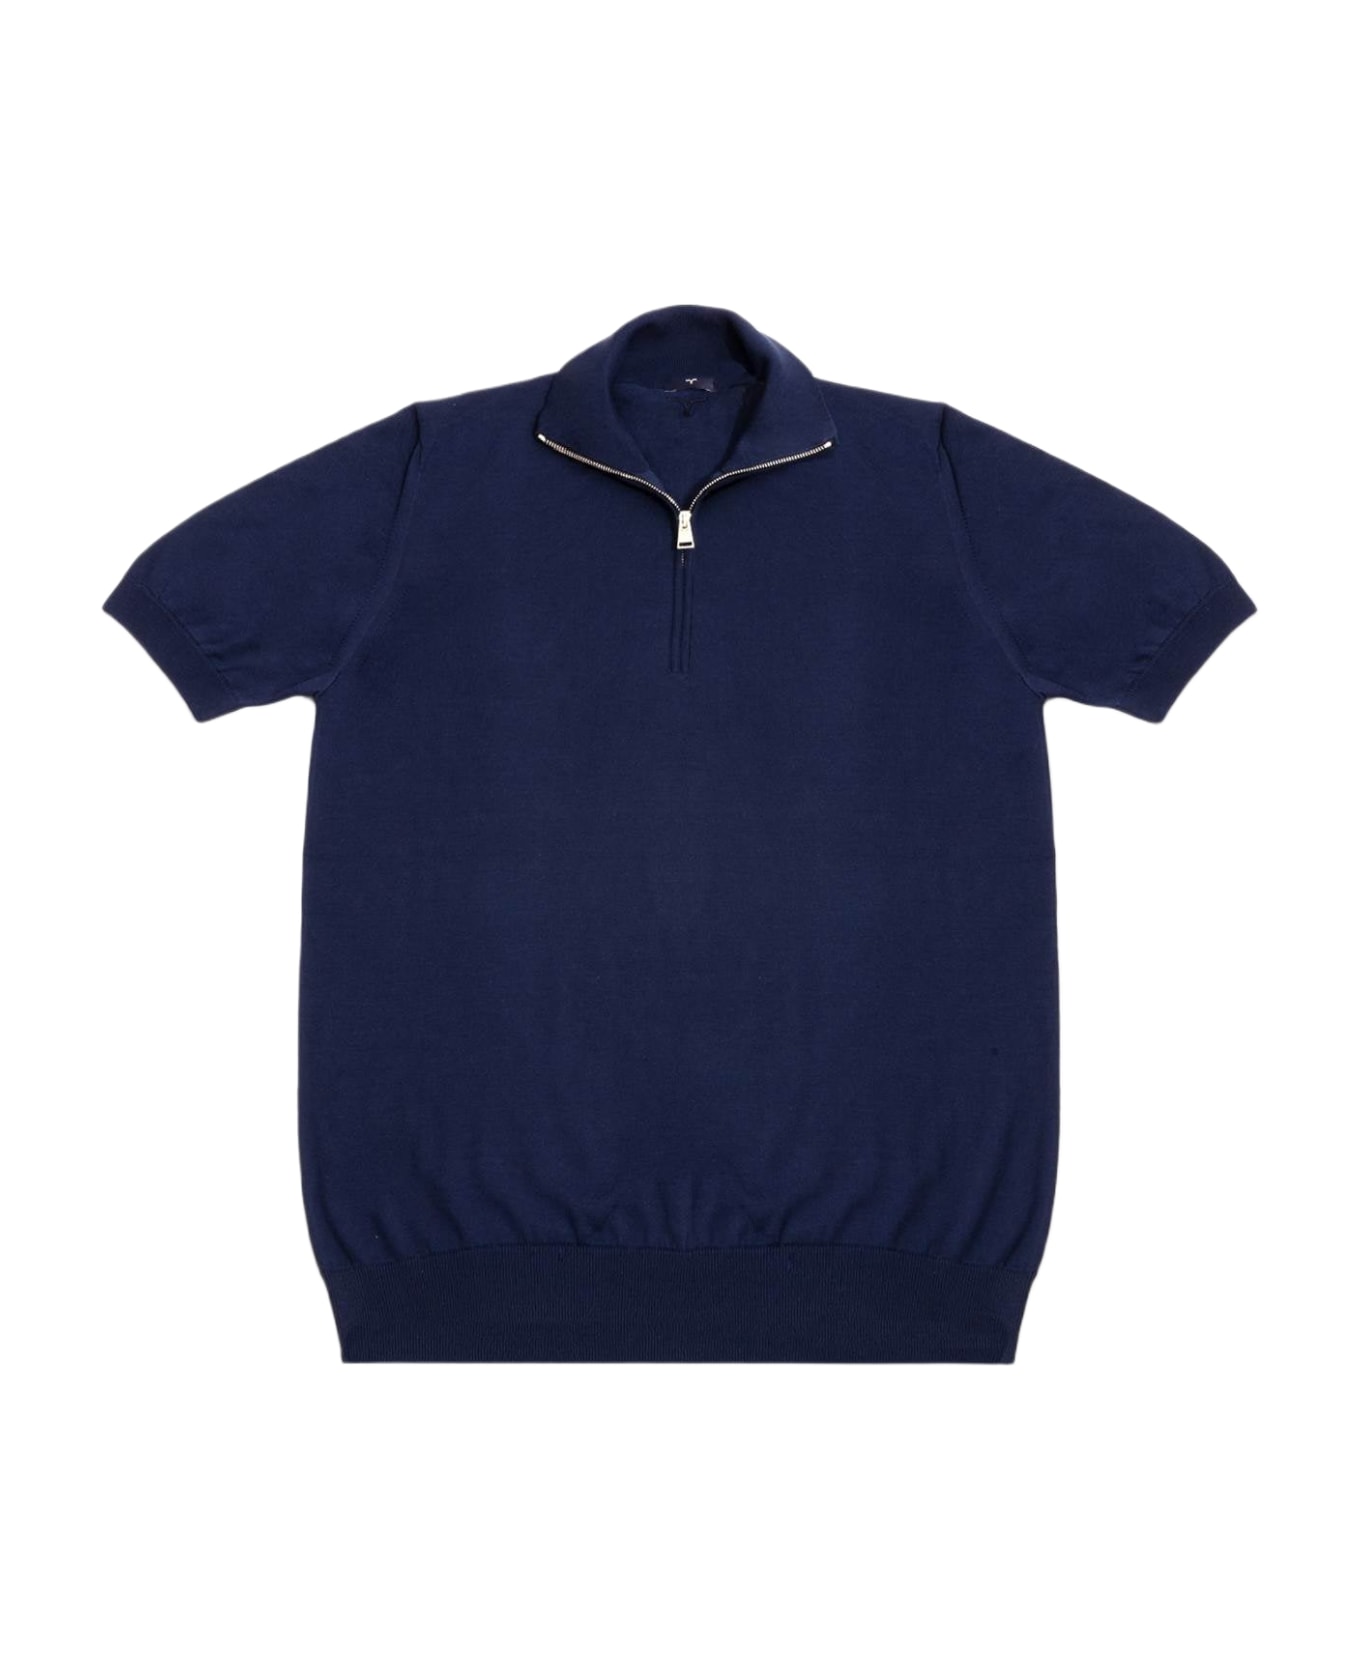 Larusmiani Paul T-shirt With Zip Sweater - Blue